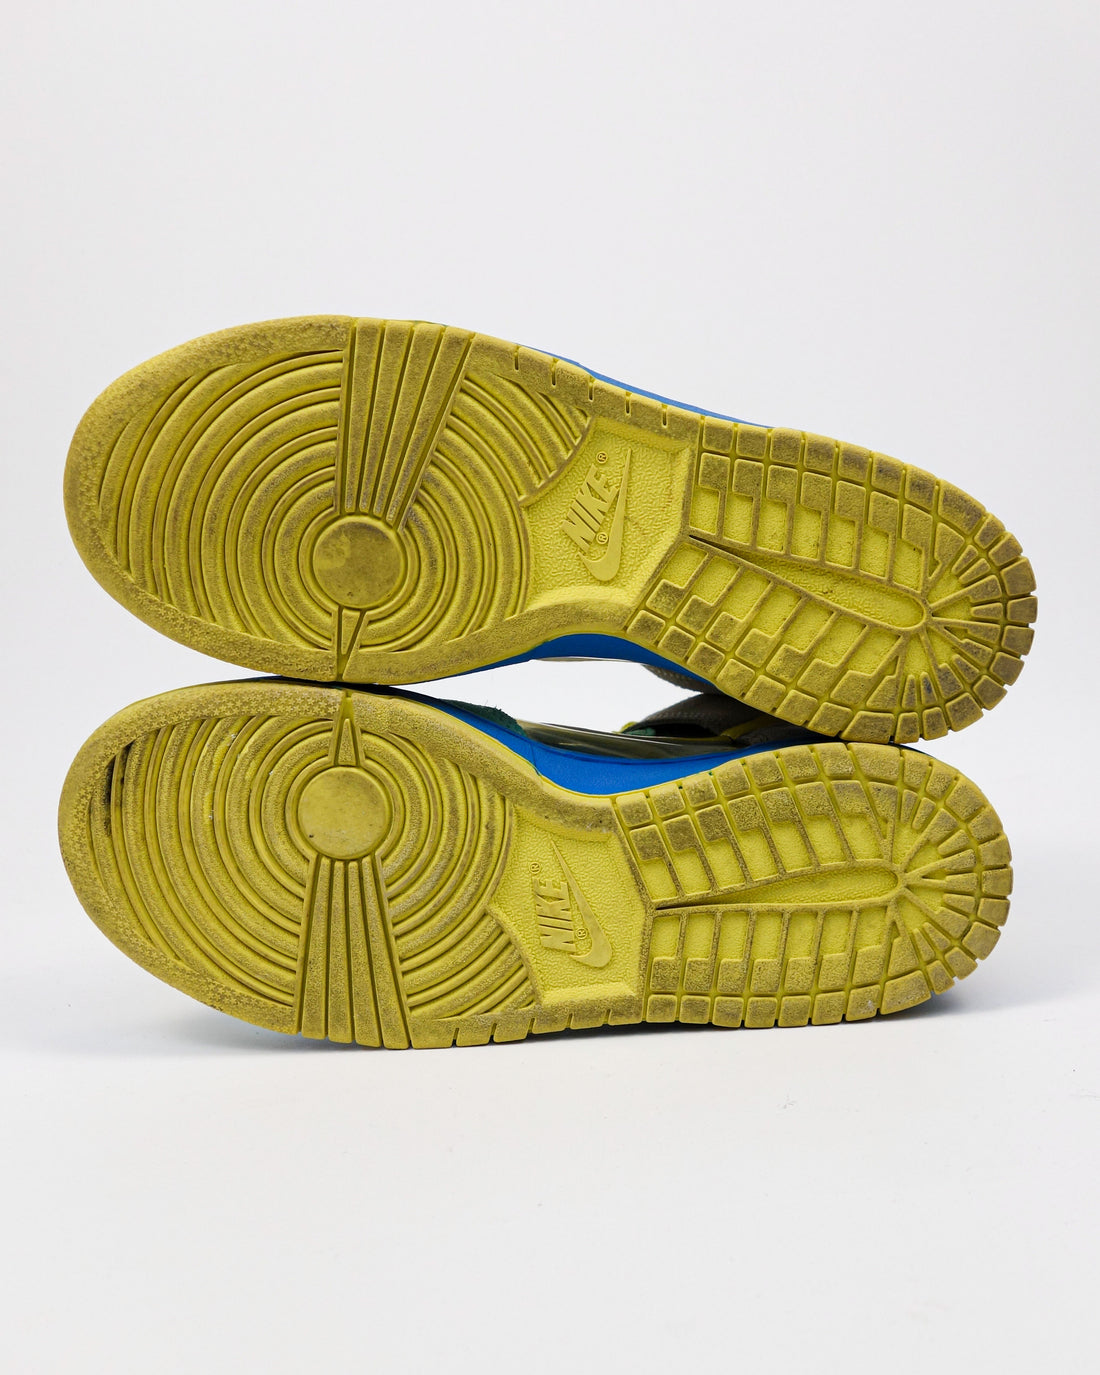 Nike Dunk High 6.0 'Mint Yellow Translucent' 2008